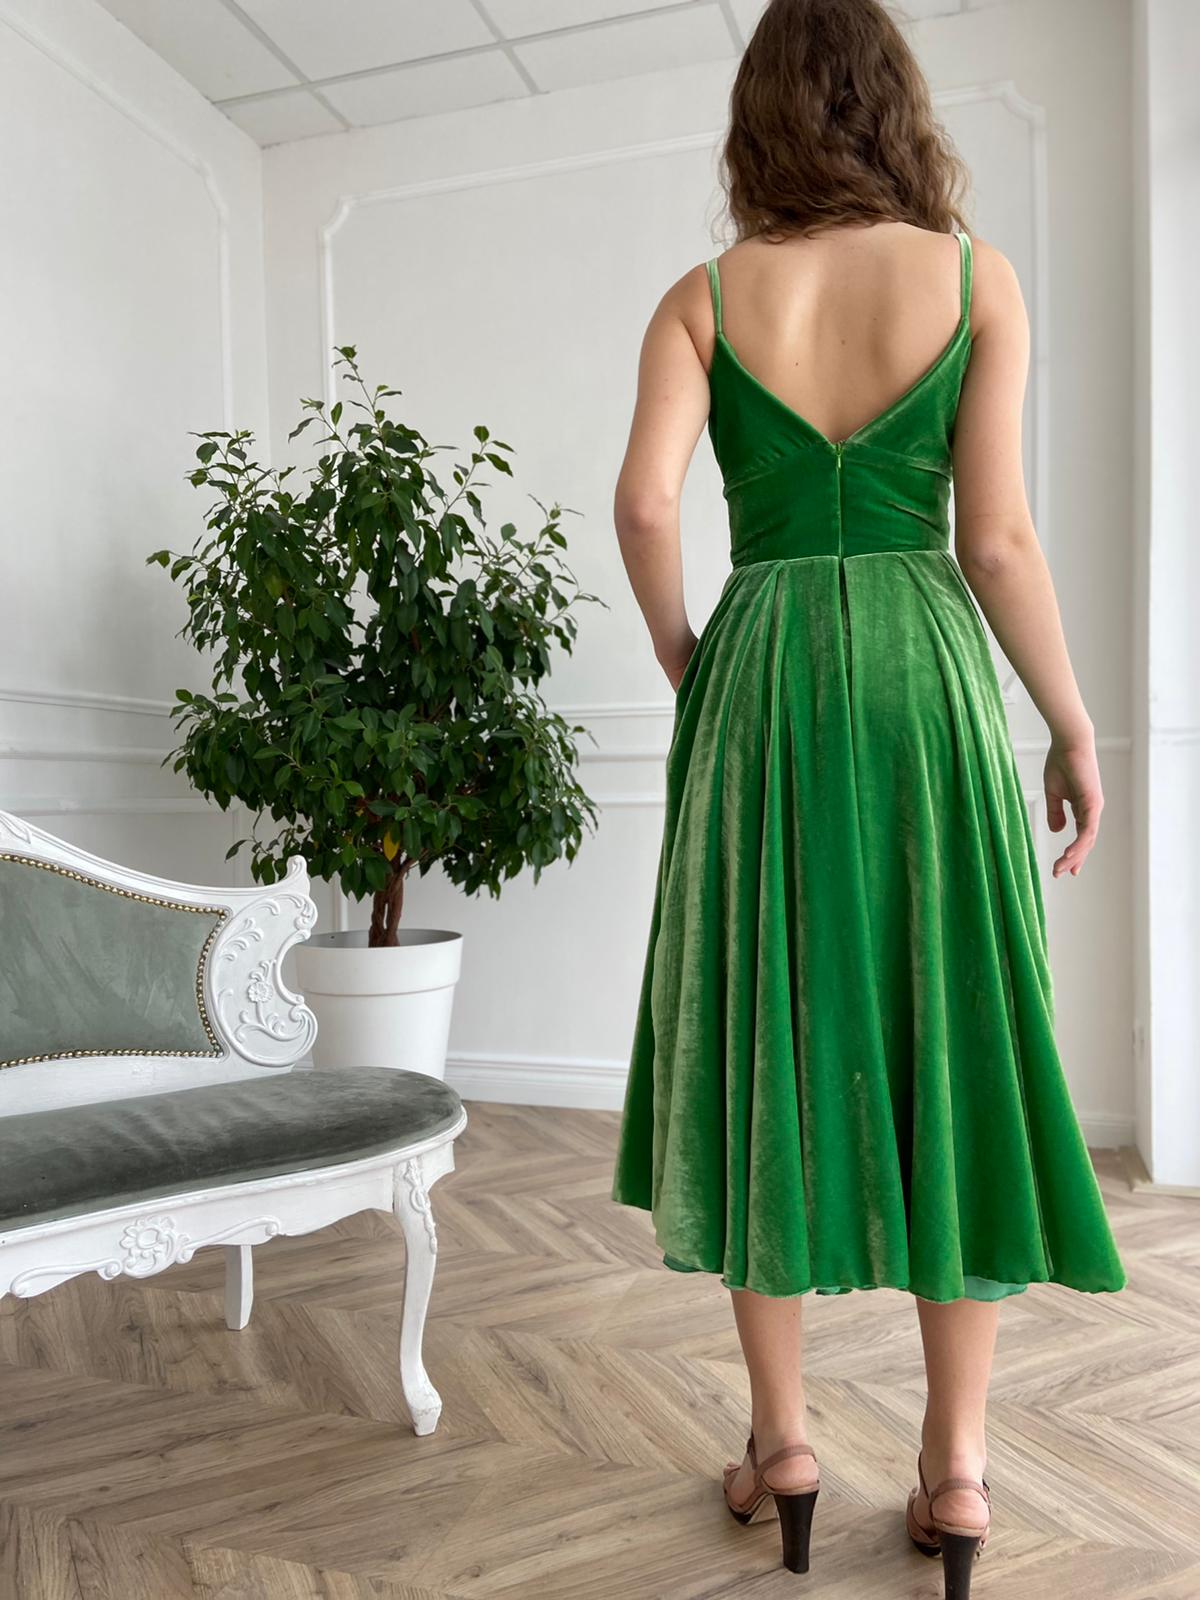 Green midi dress with spaghetti straps and v-neck